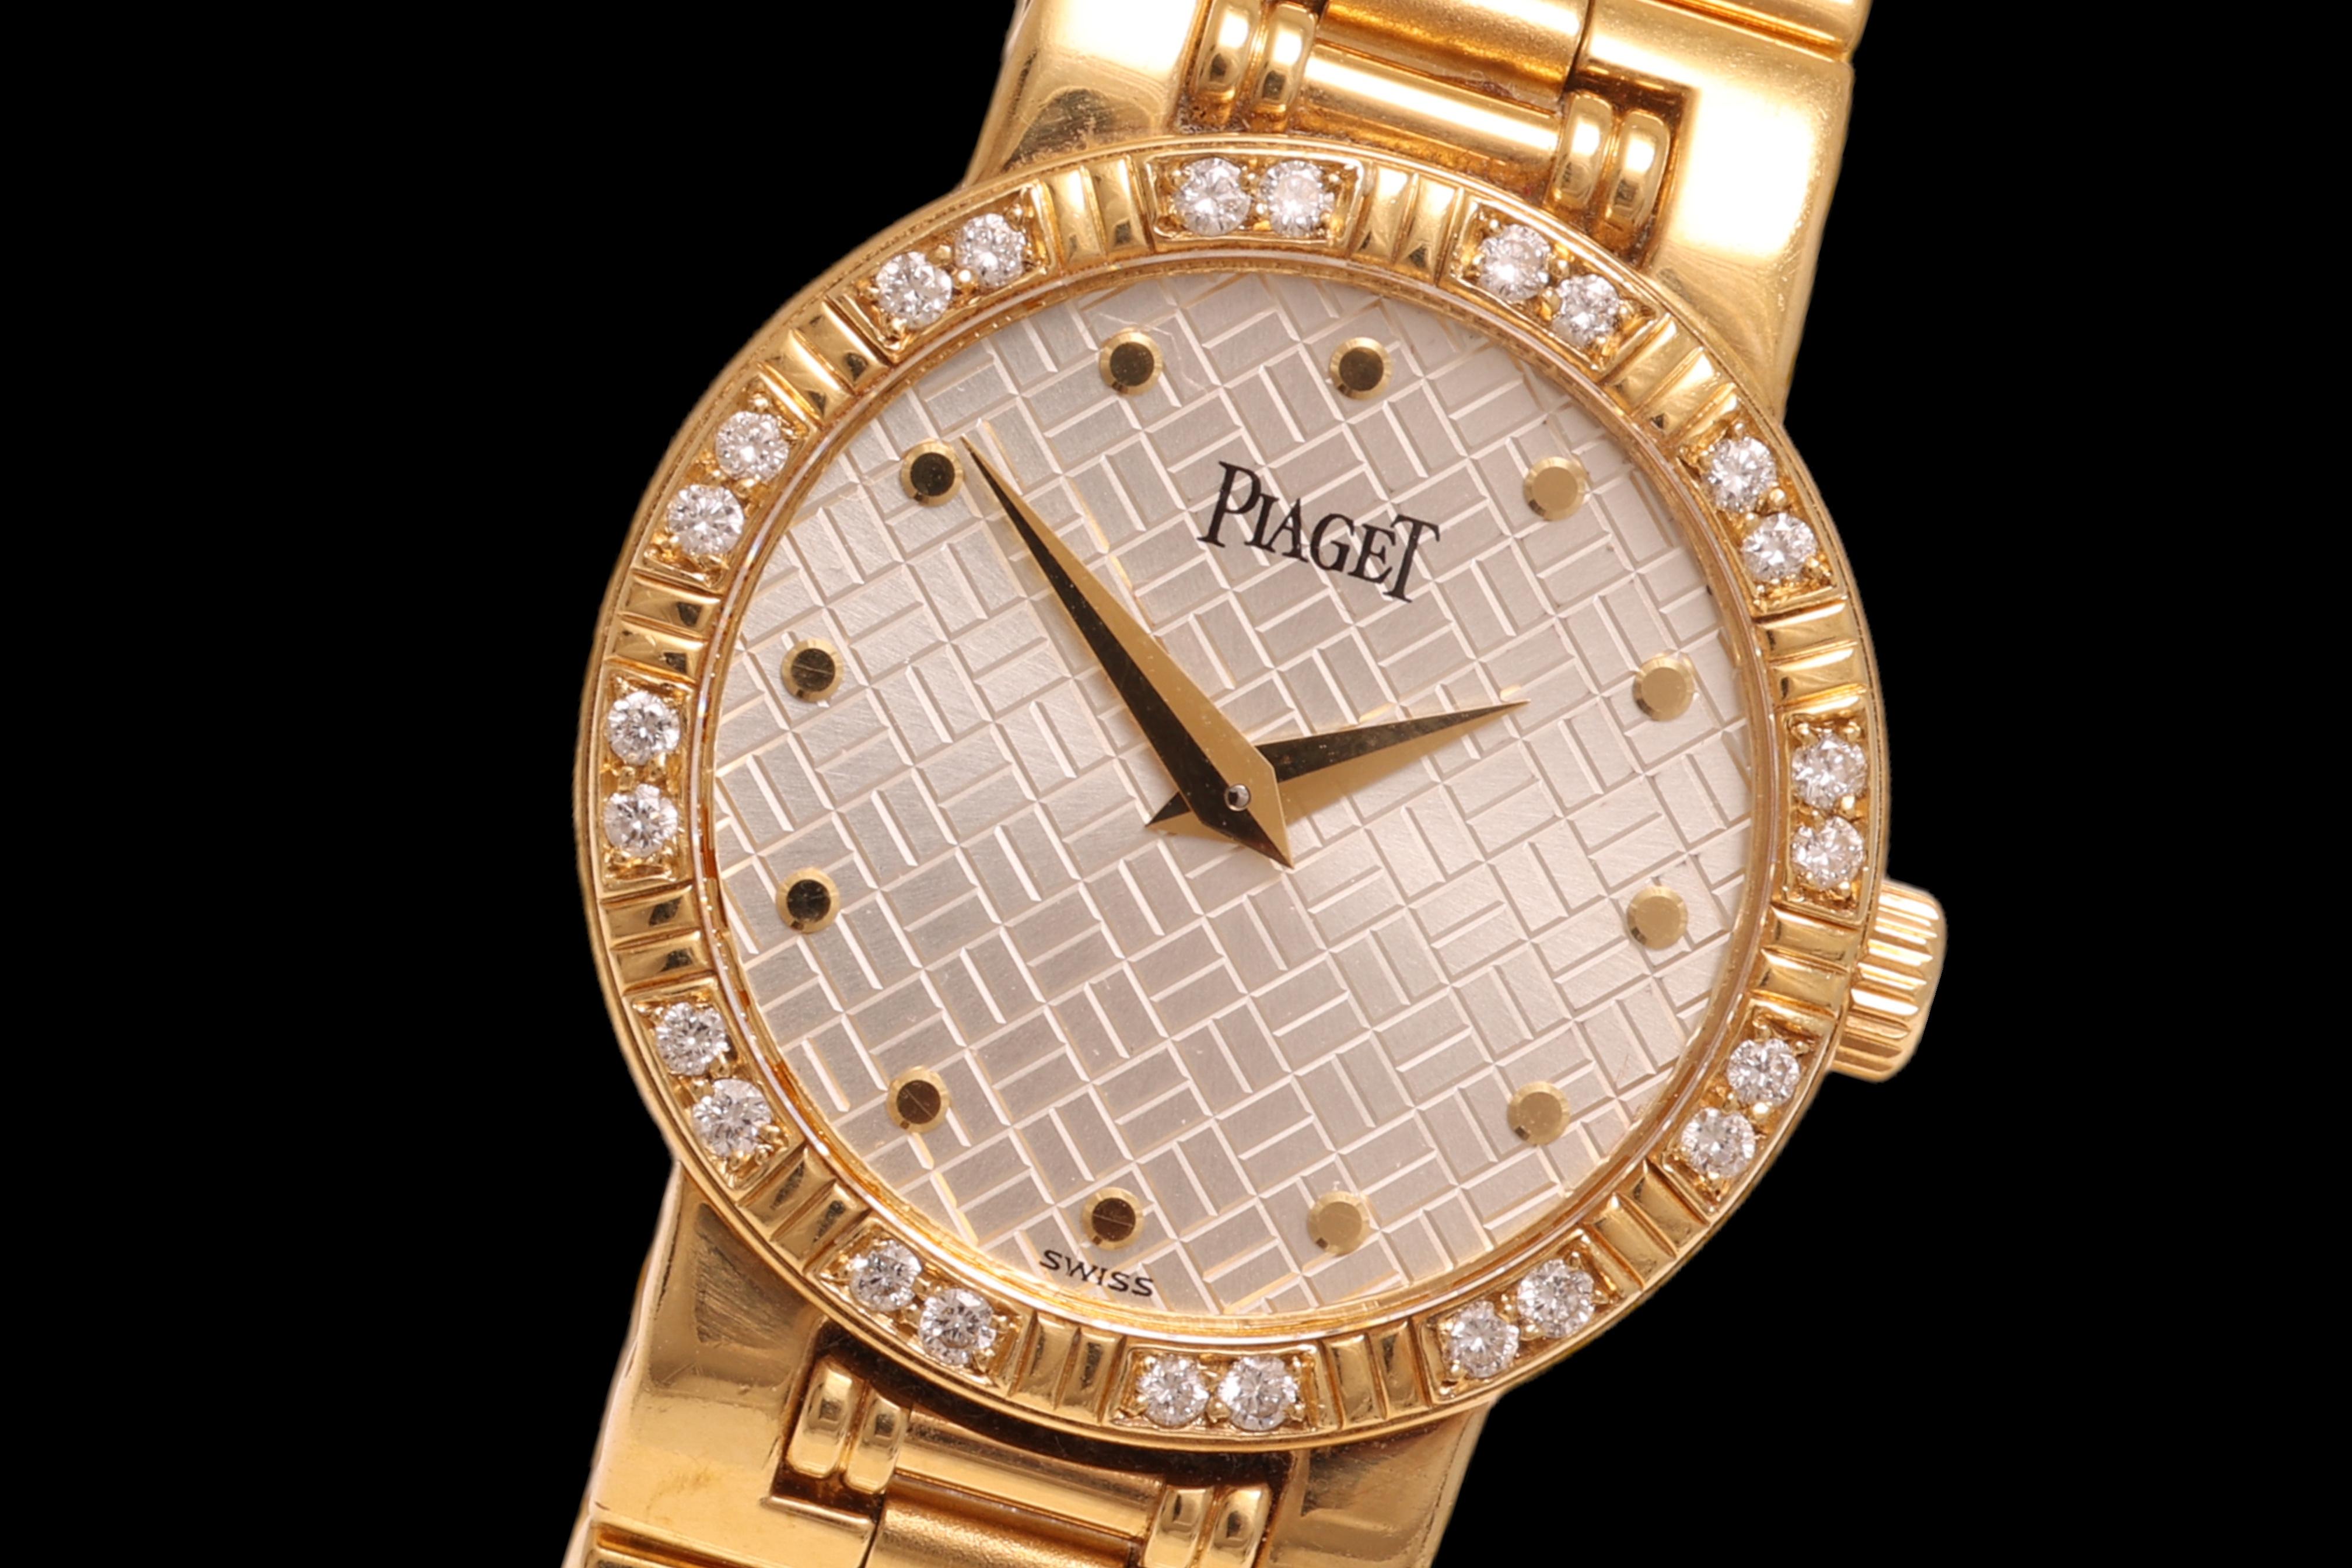 piaget dancer watch with diamonds